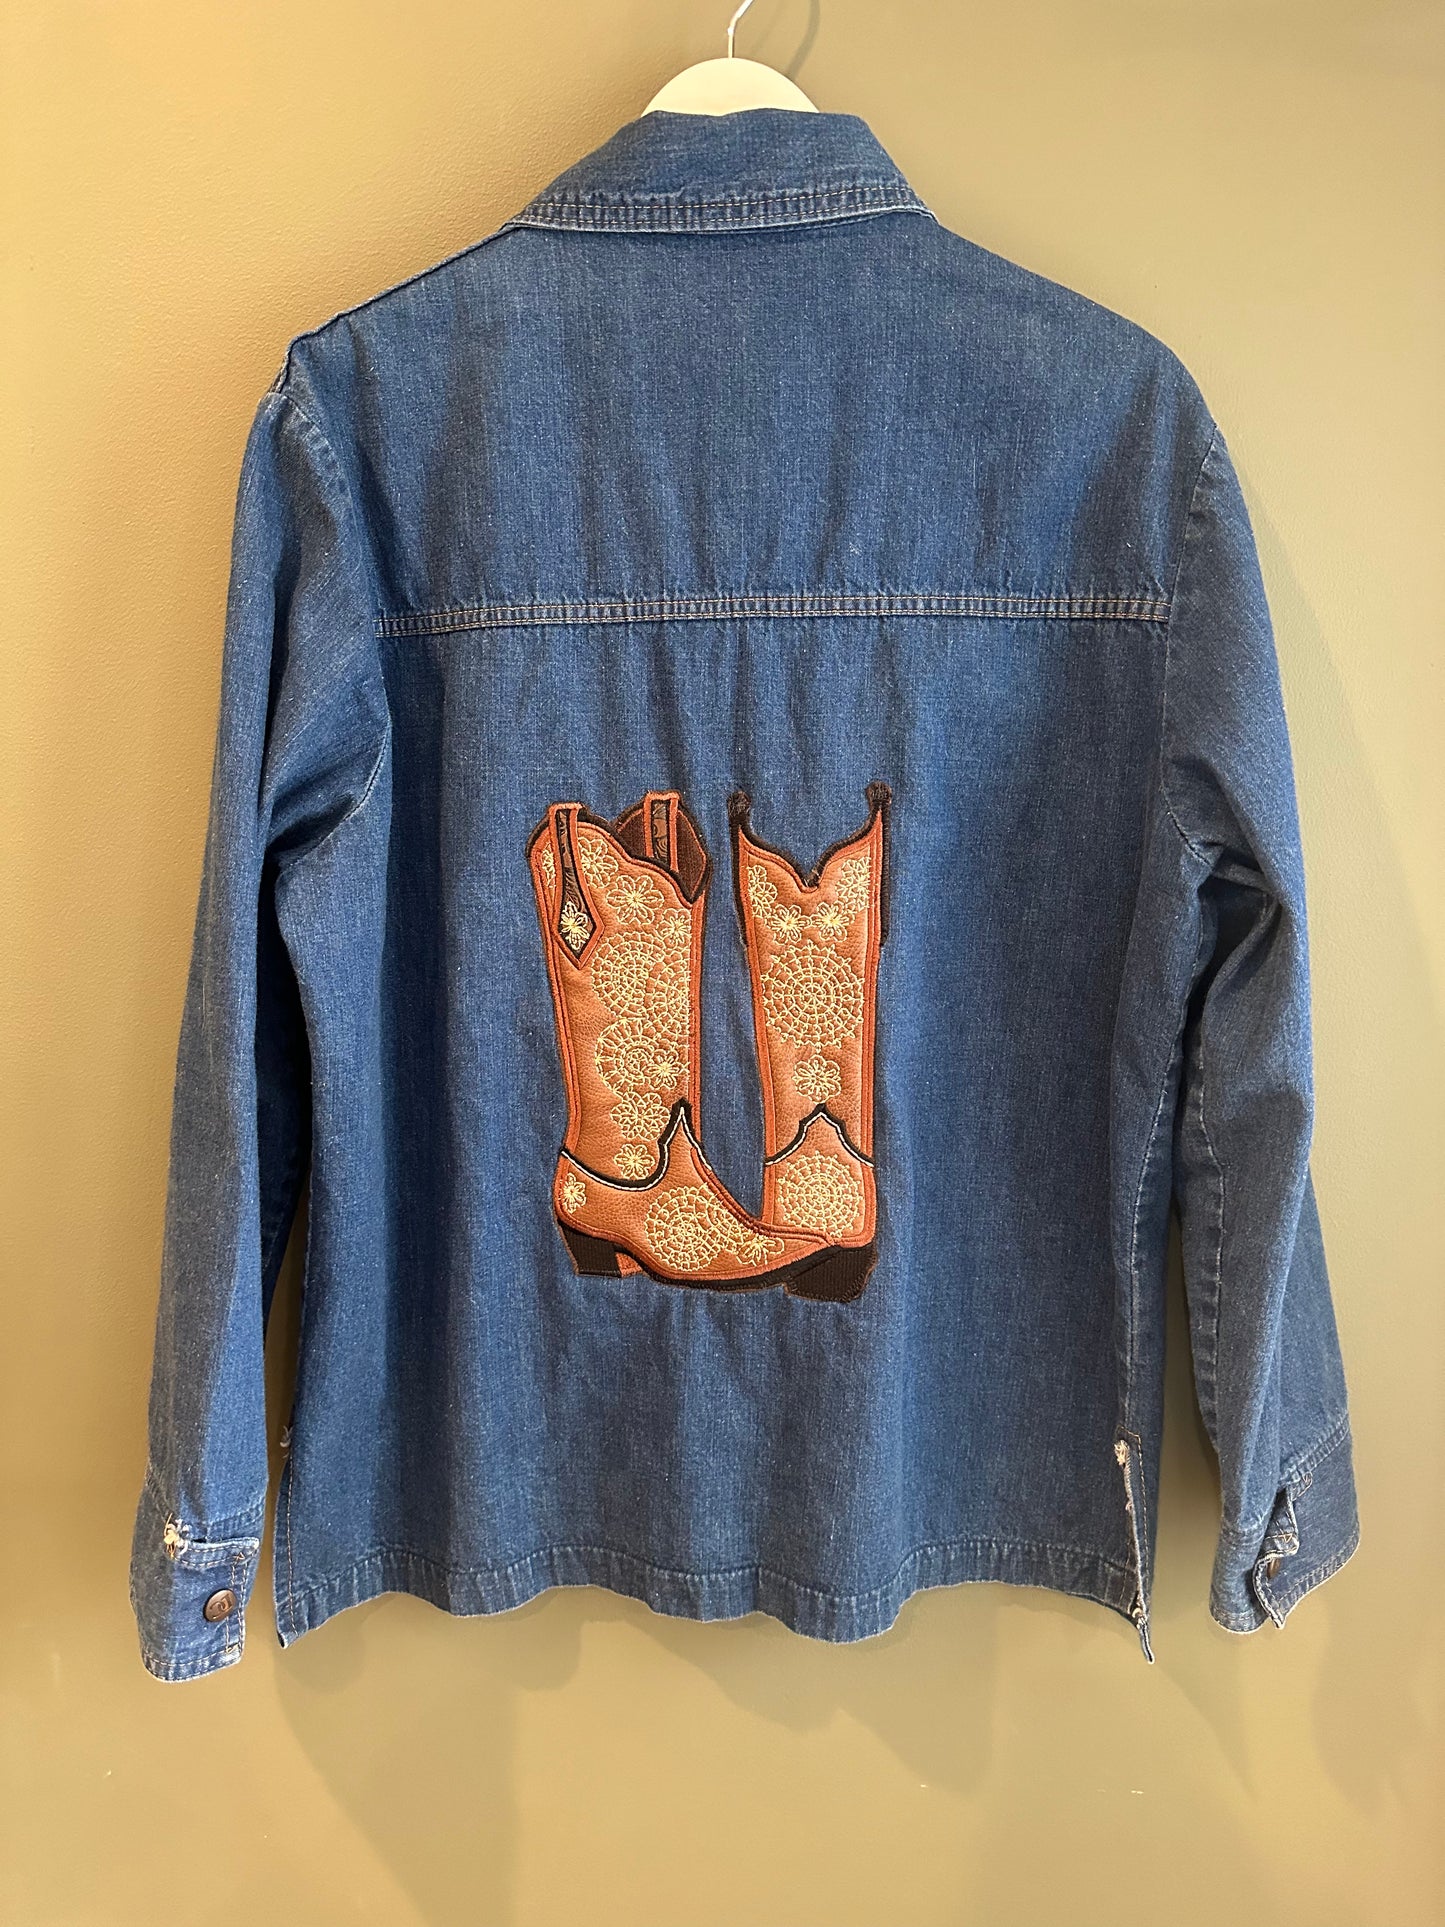 Cowboy Boot Denim Jacket, 1990’s, 46” Bust